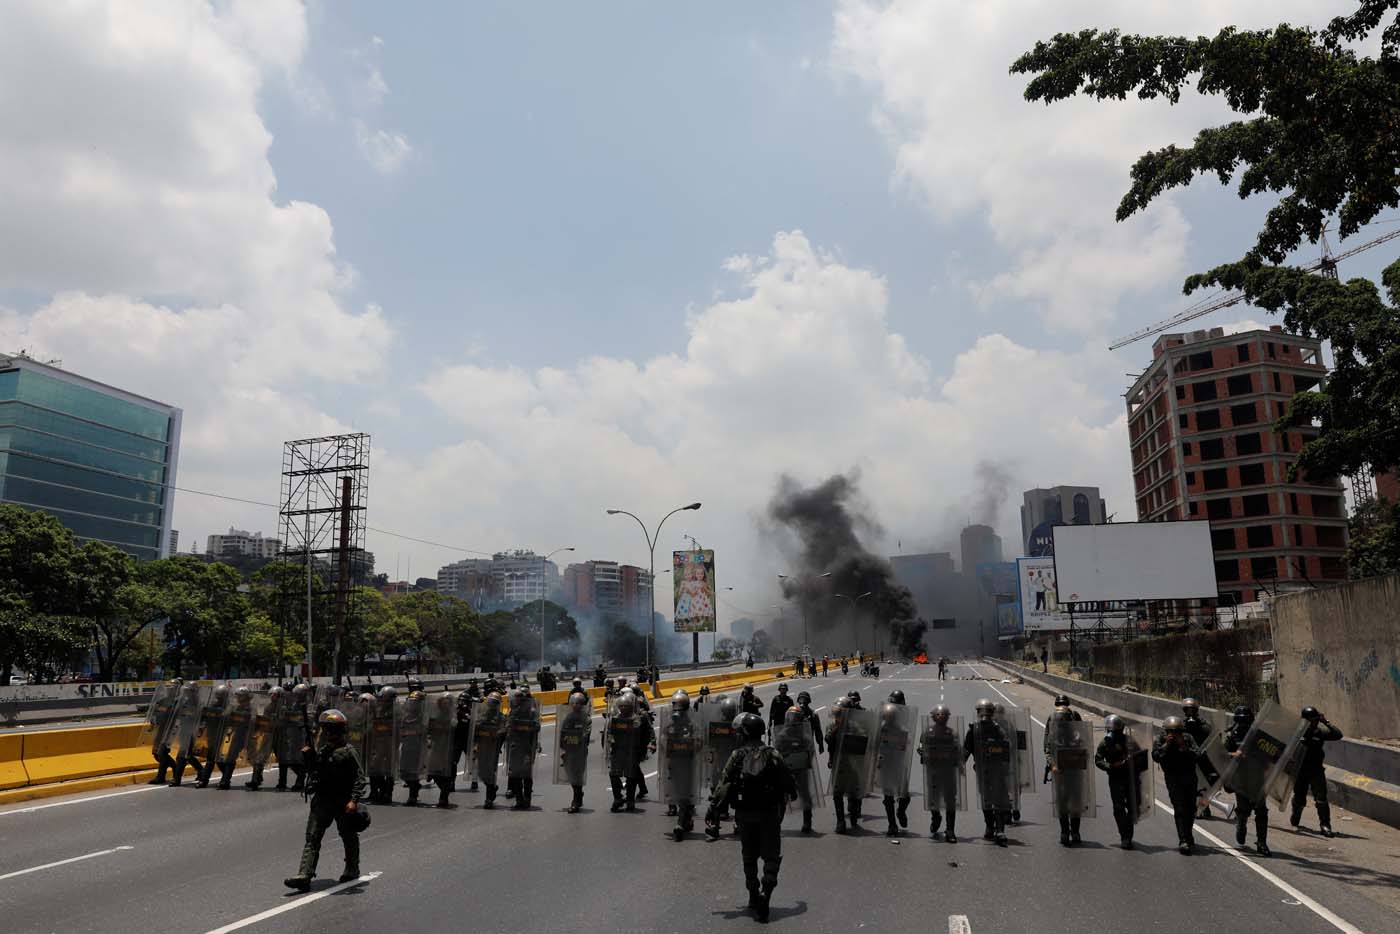 Riot police take position as demonstrators rally against Venezuela's President Nicolas Maduro's government in Caracas, Venezuela April 10, 2017. REUTERS/Carlos Garcia Rawlins